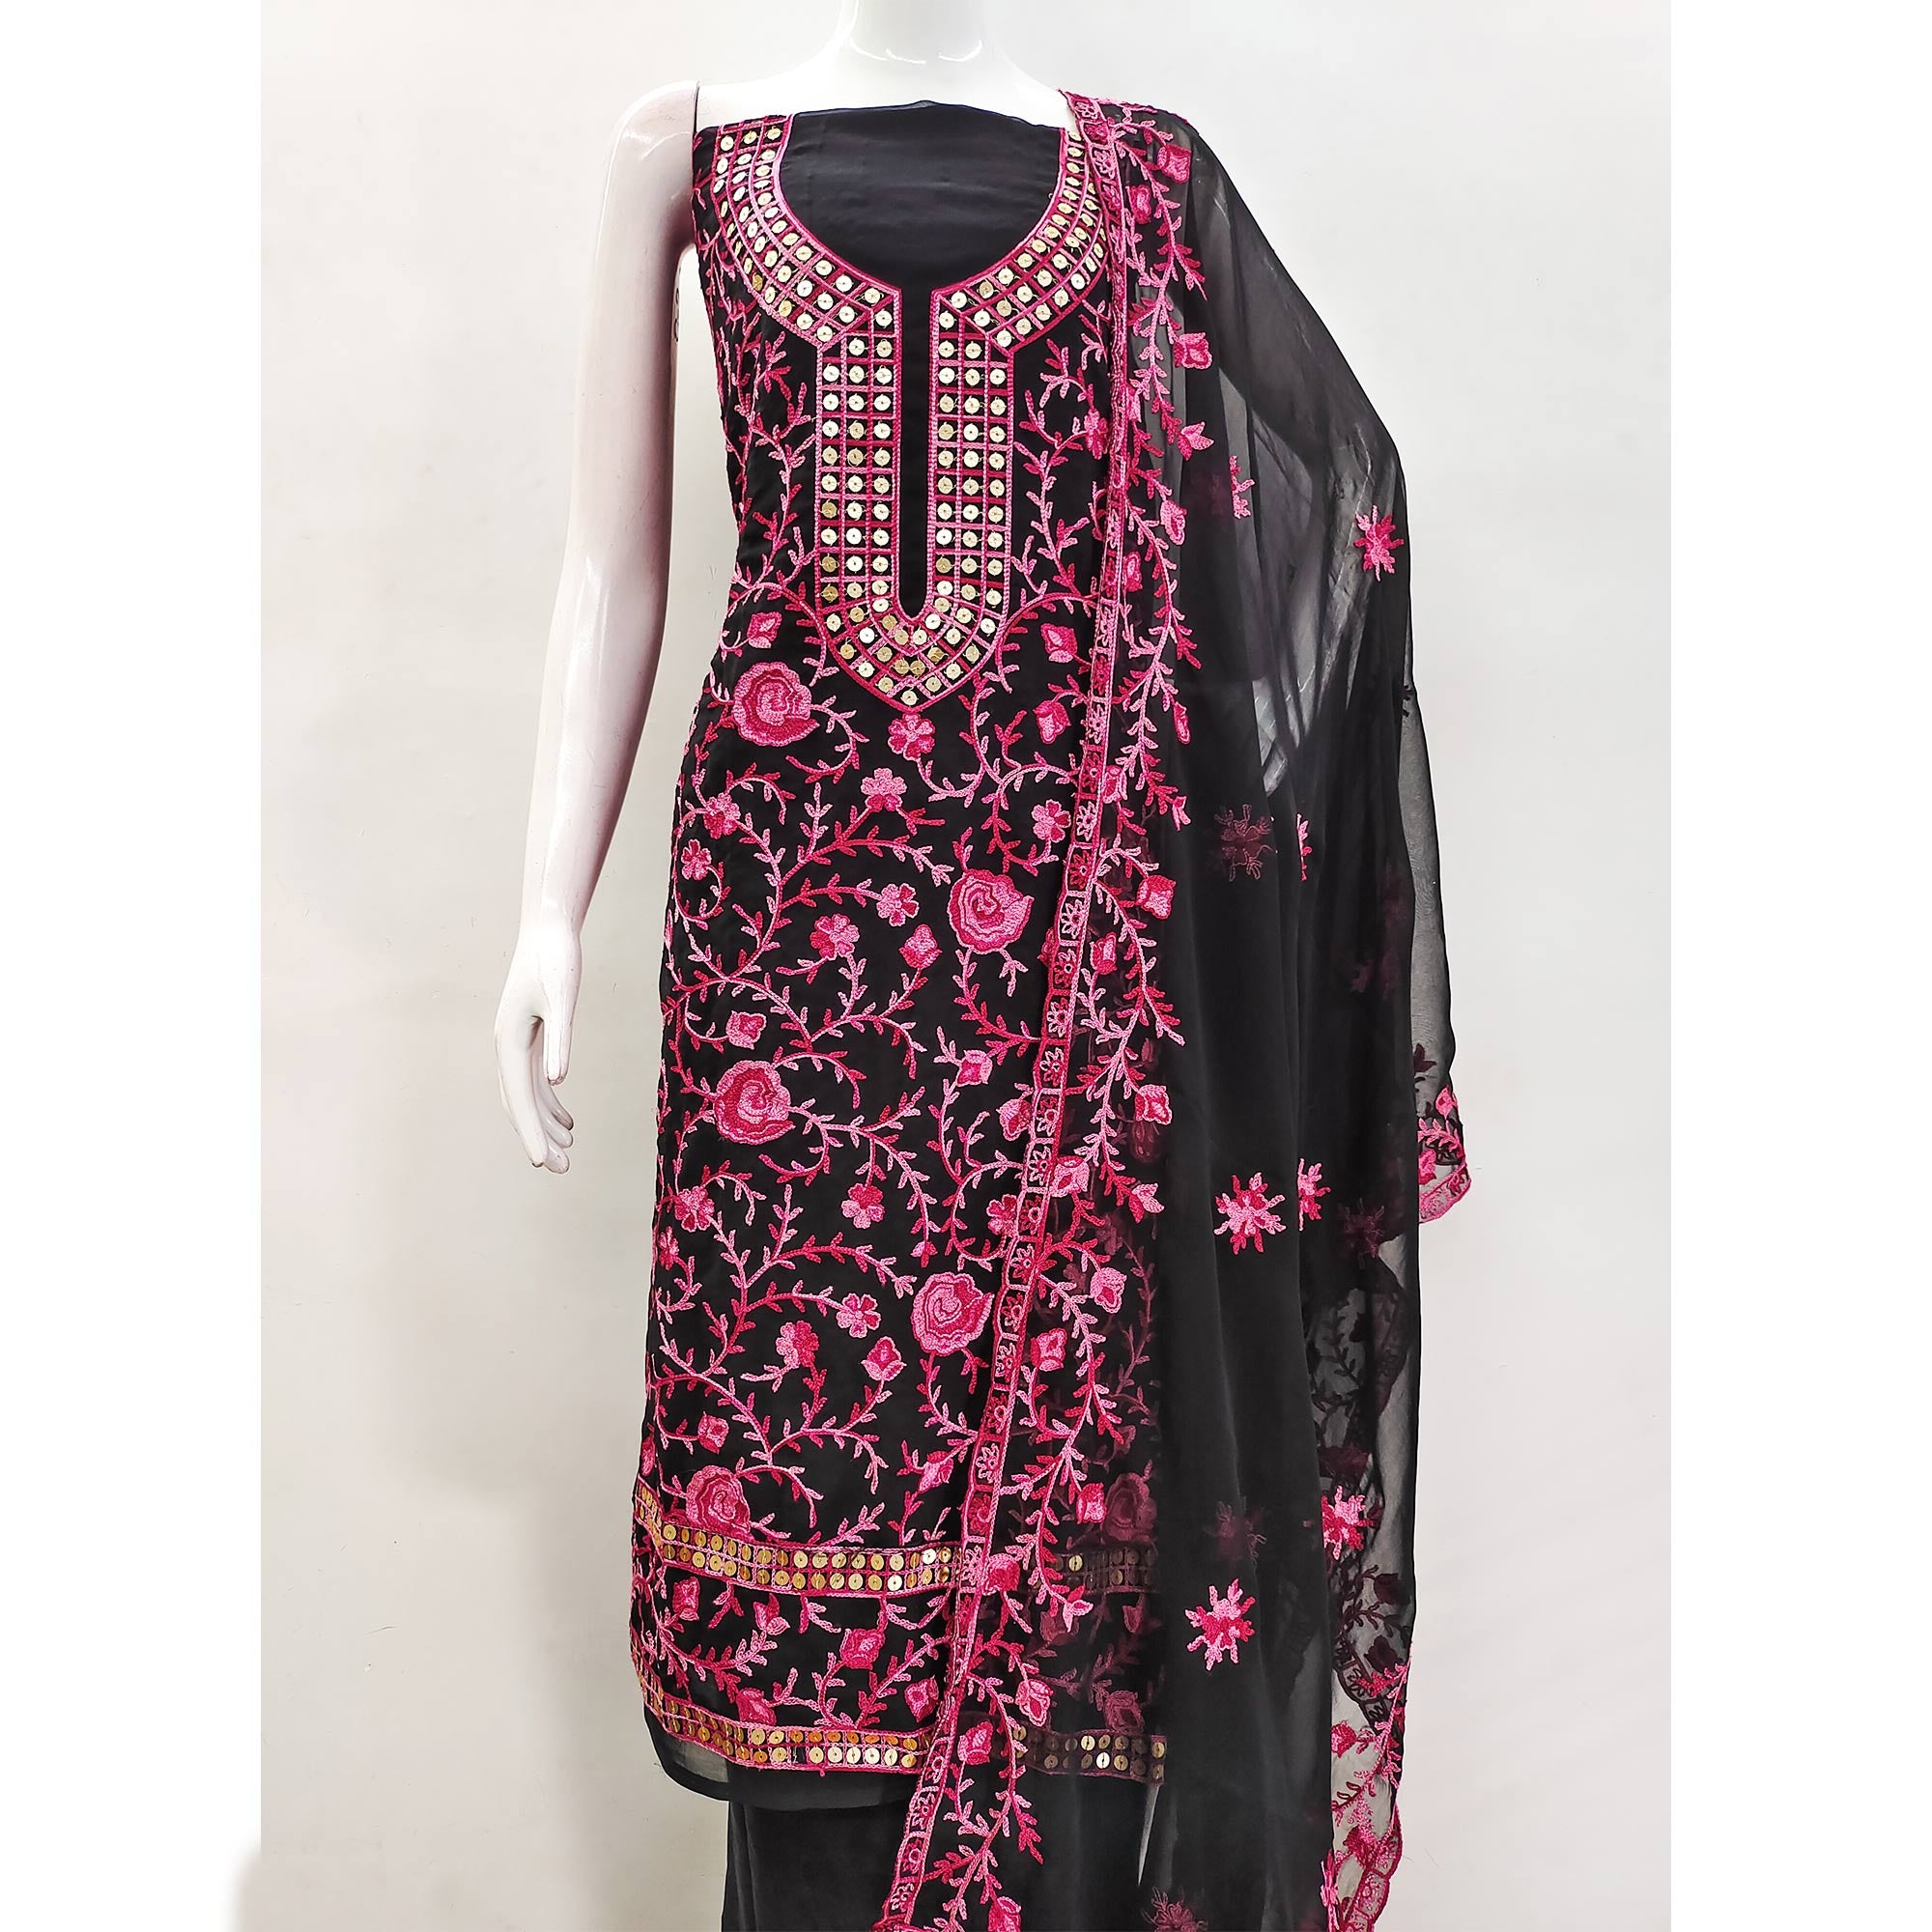 Black & Gajari Pink Floral Sequins Embroidered Georgette Dress Material